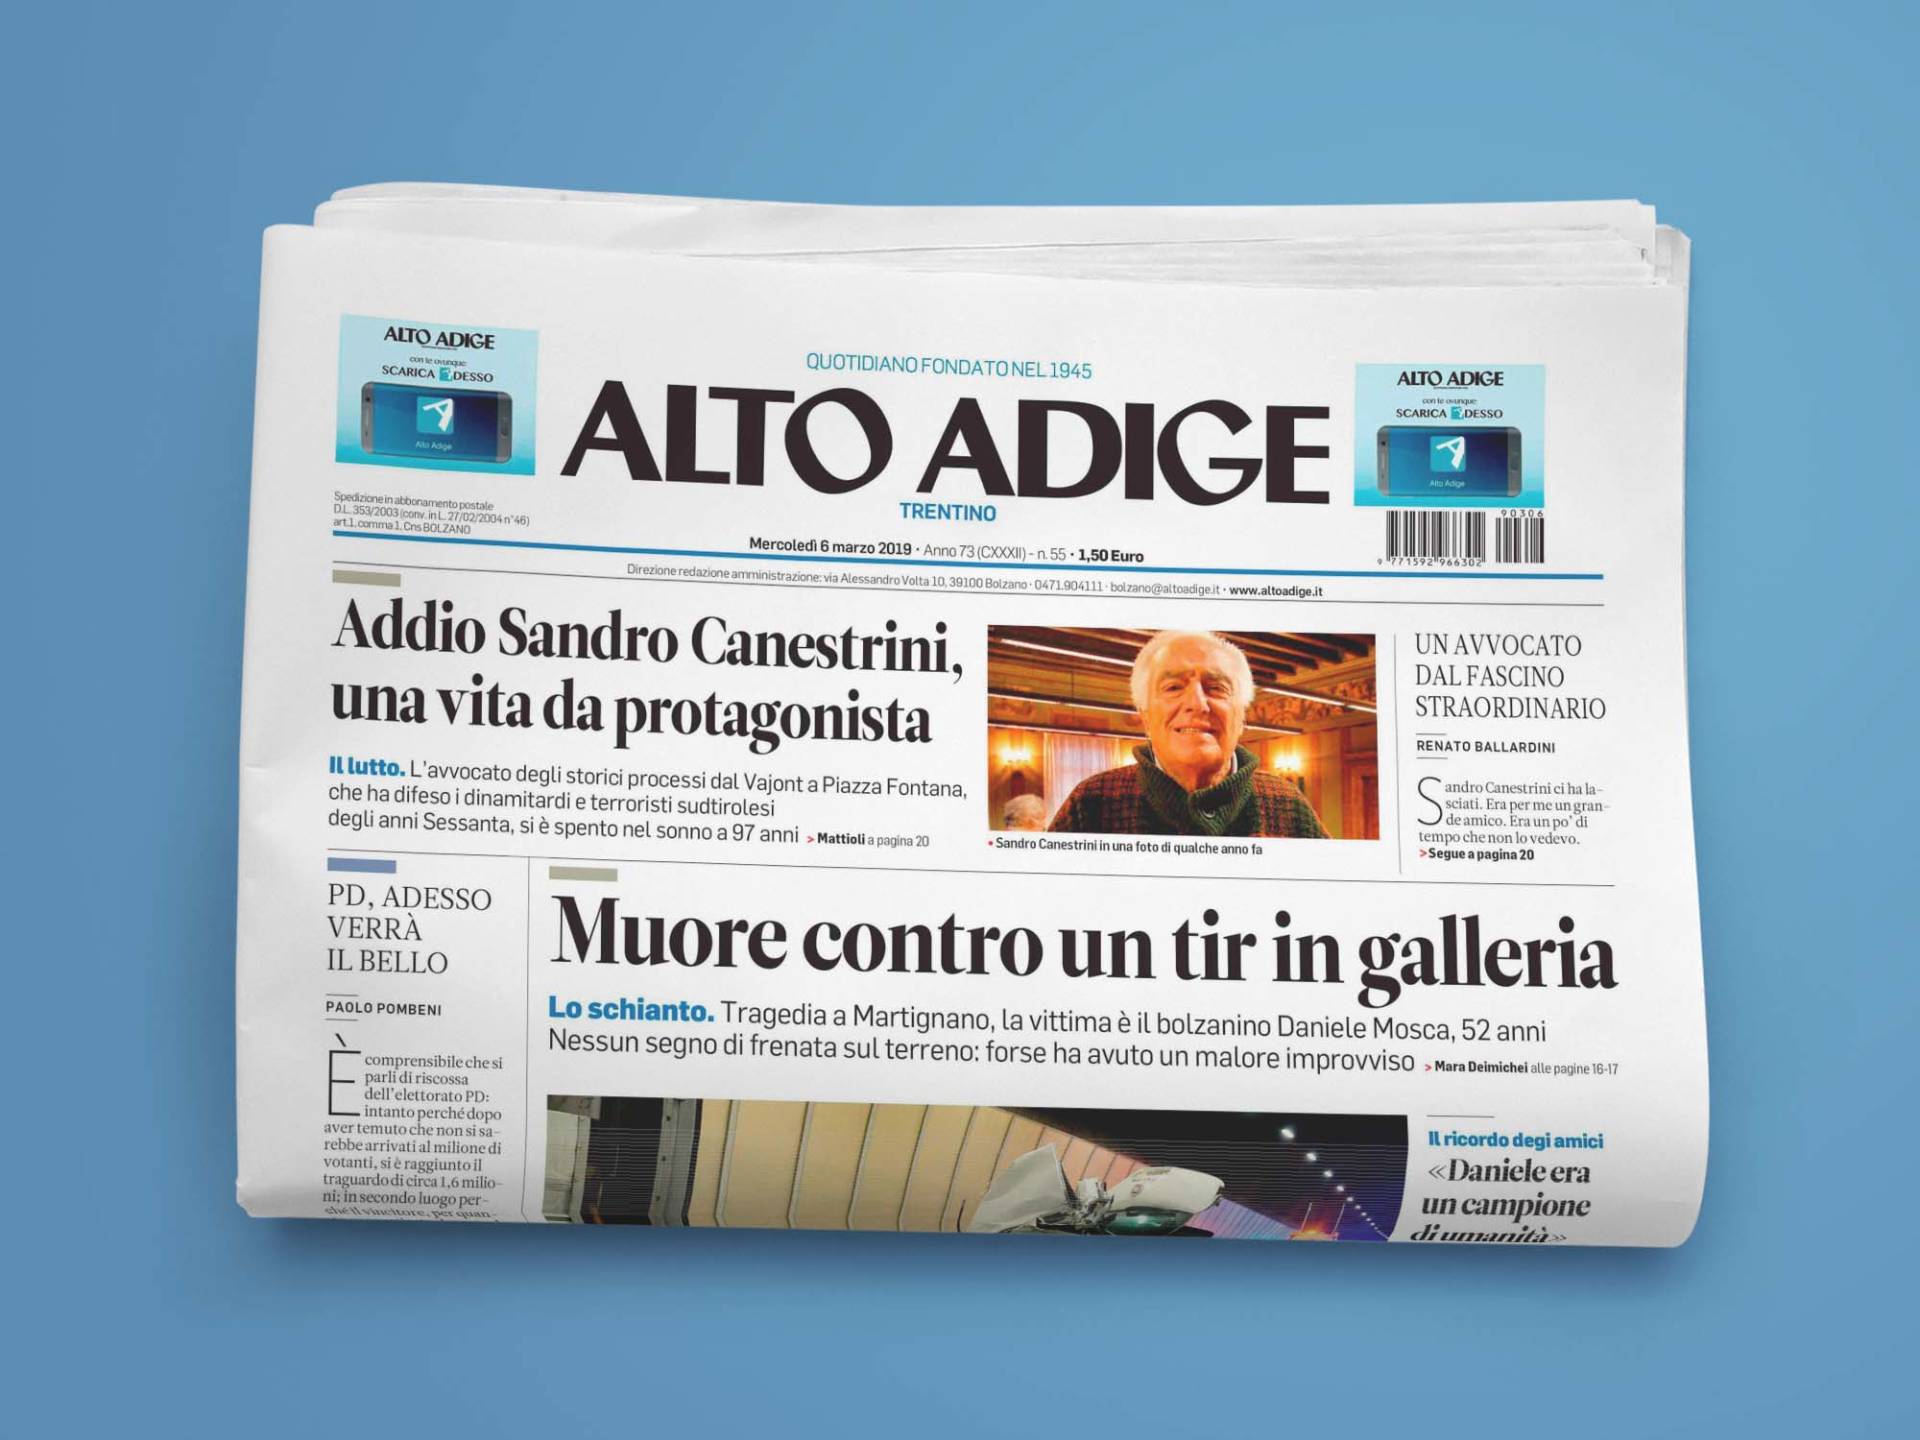 Alto_Adige_01_Wenceslau_News_Design